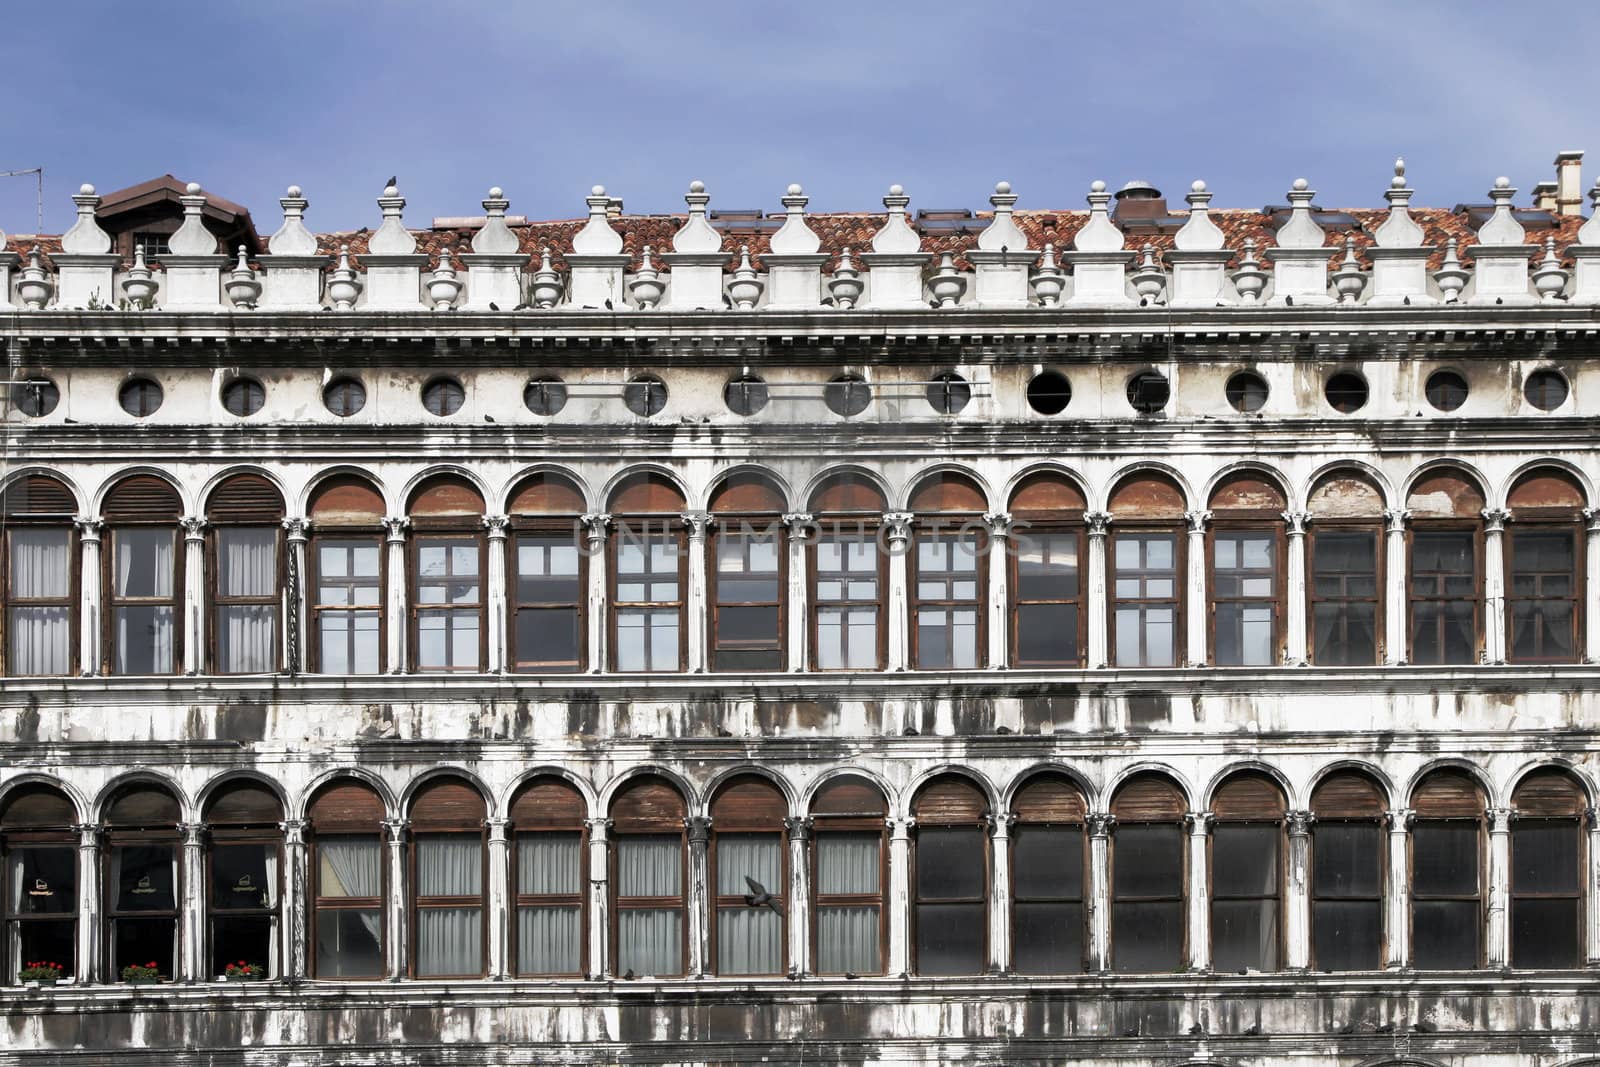 Piazza San Marco Building Facade, Venice, Italy by thorsten